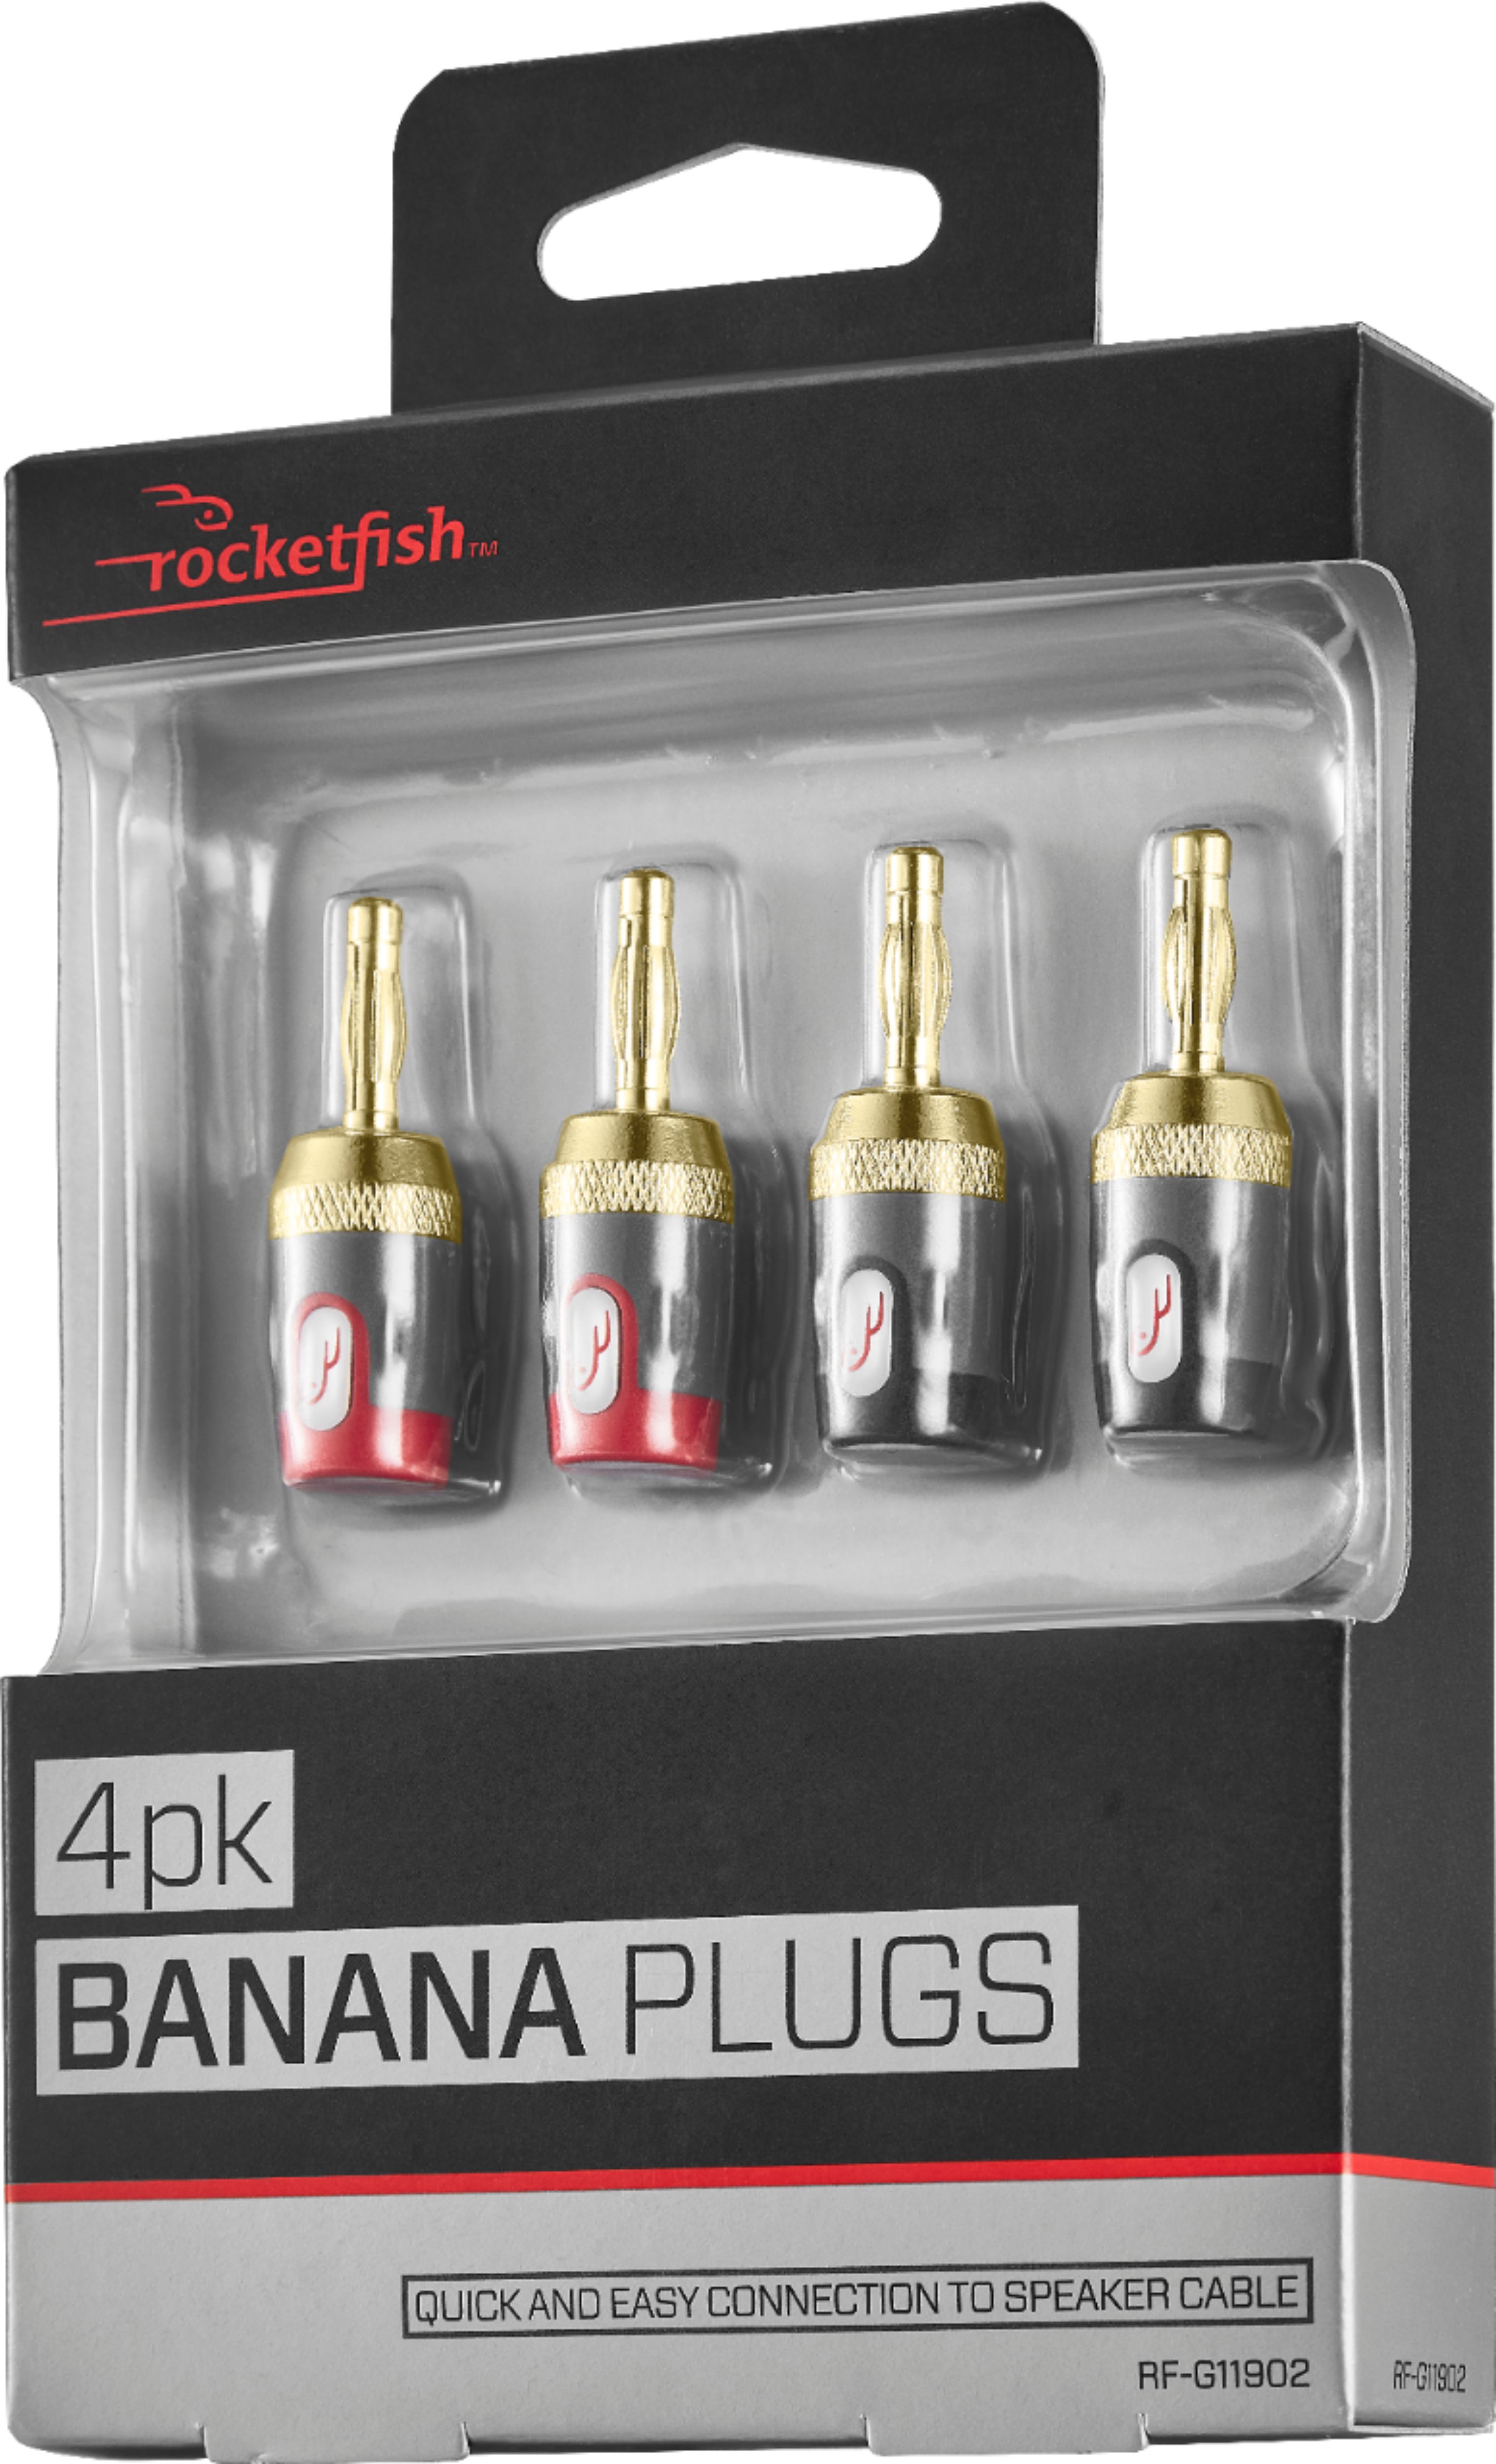 Rocketfish - 100' Bulk Speaker Cable - Gold